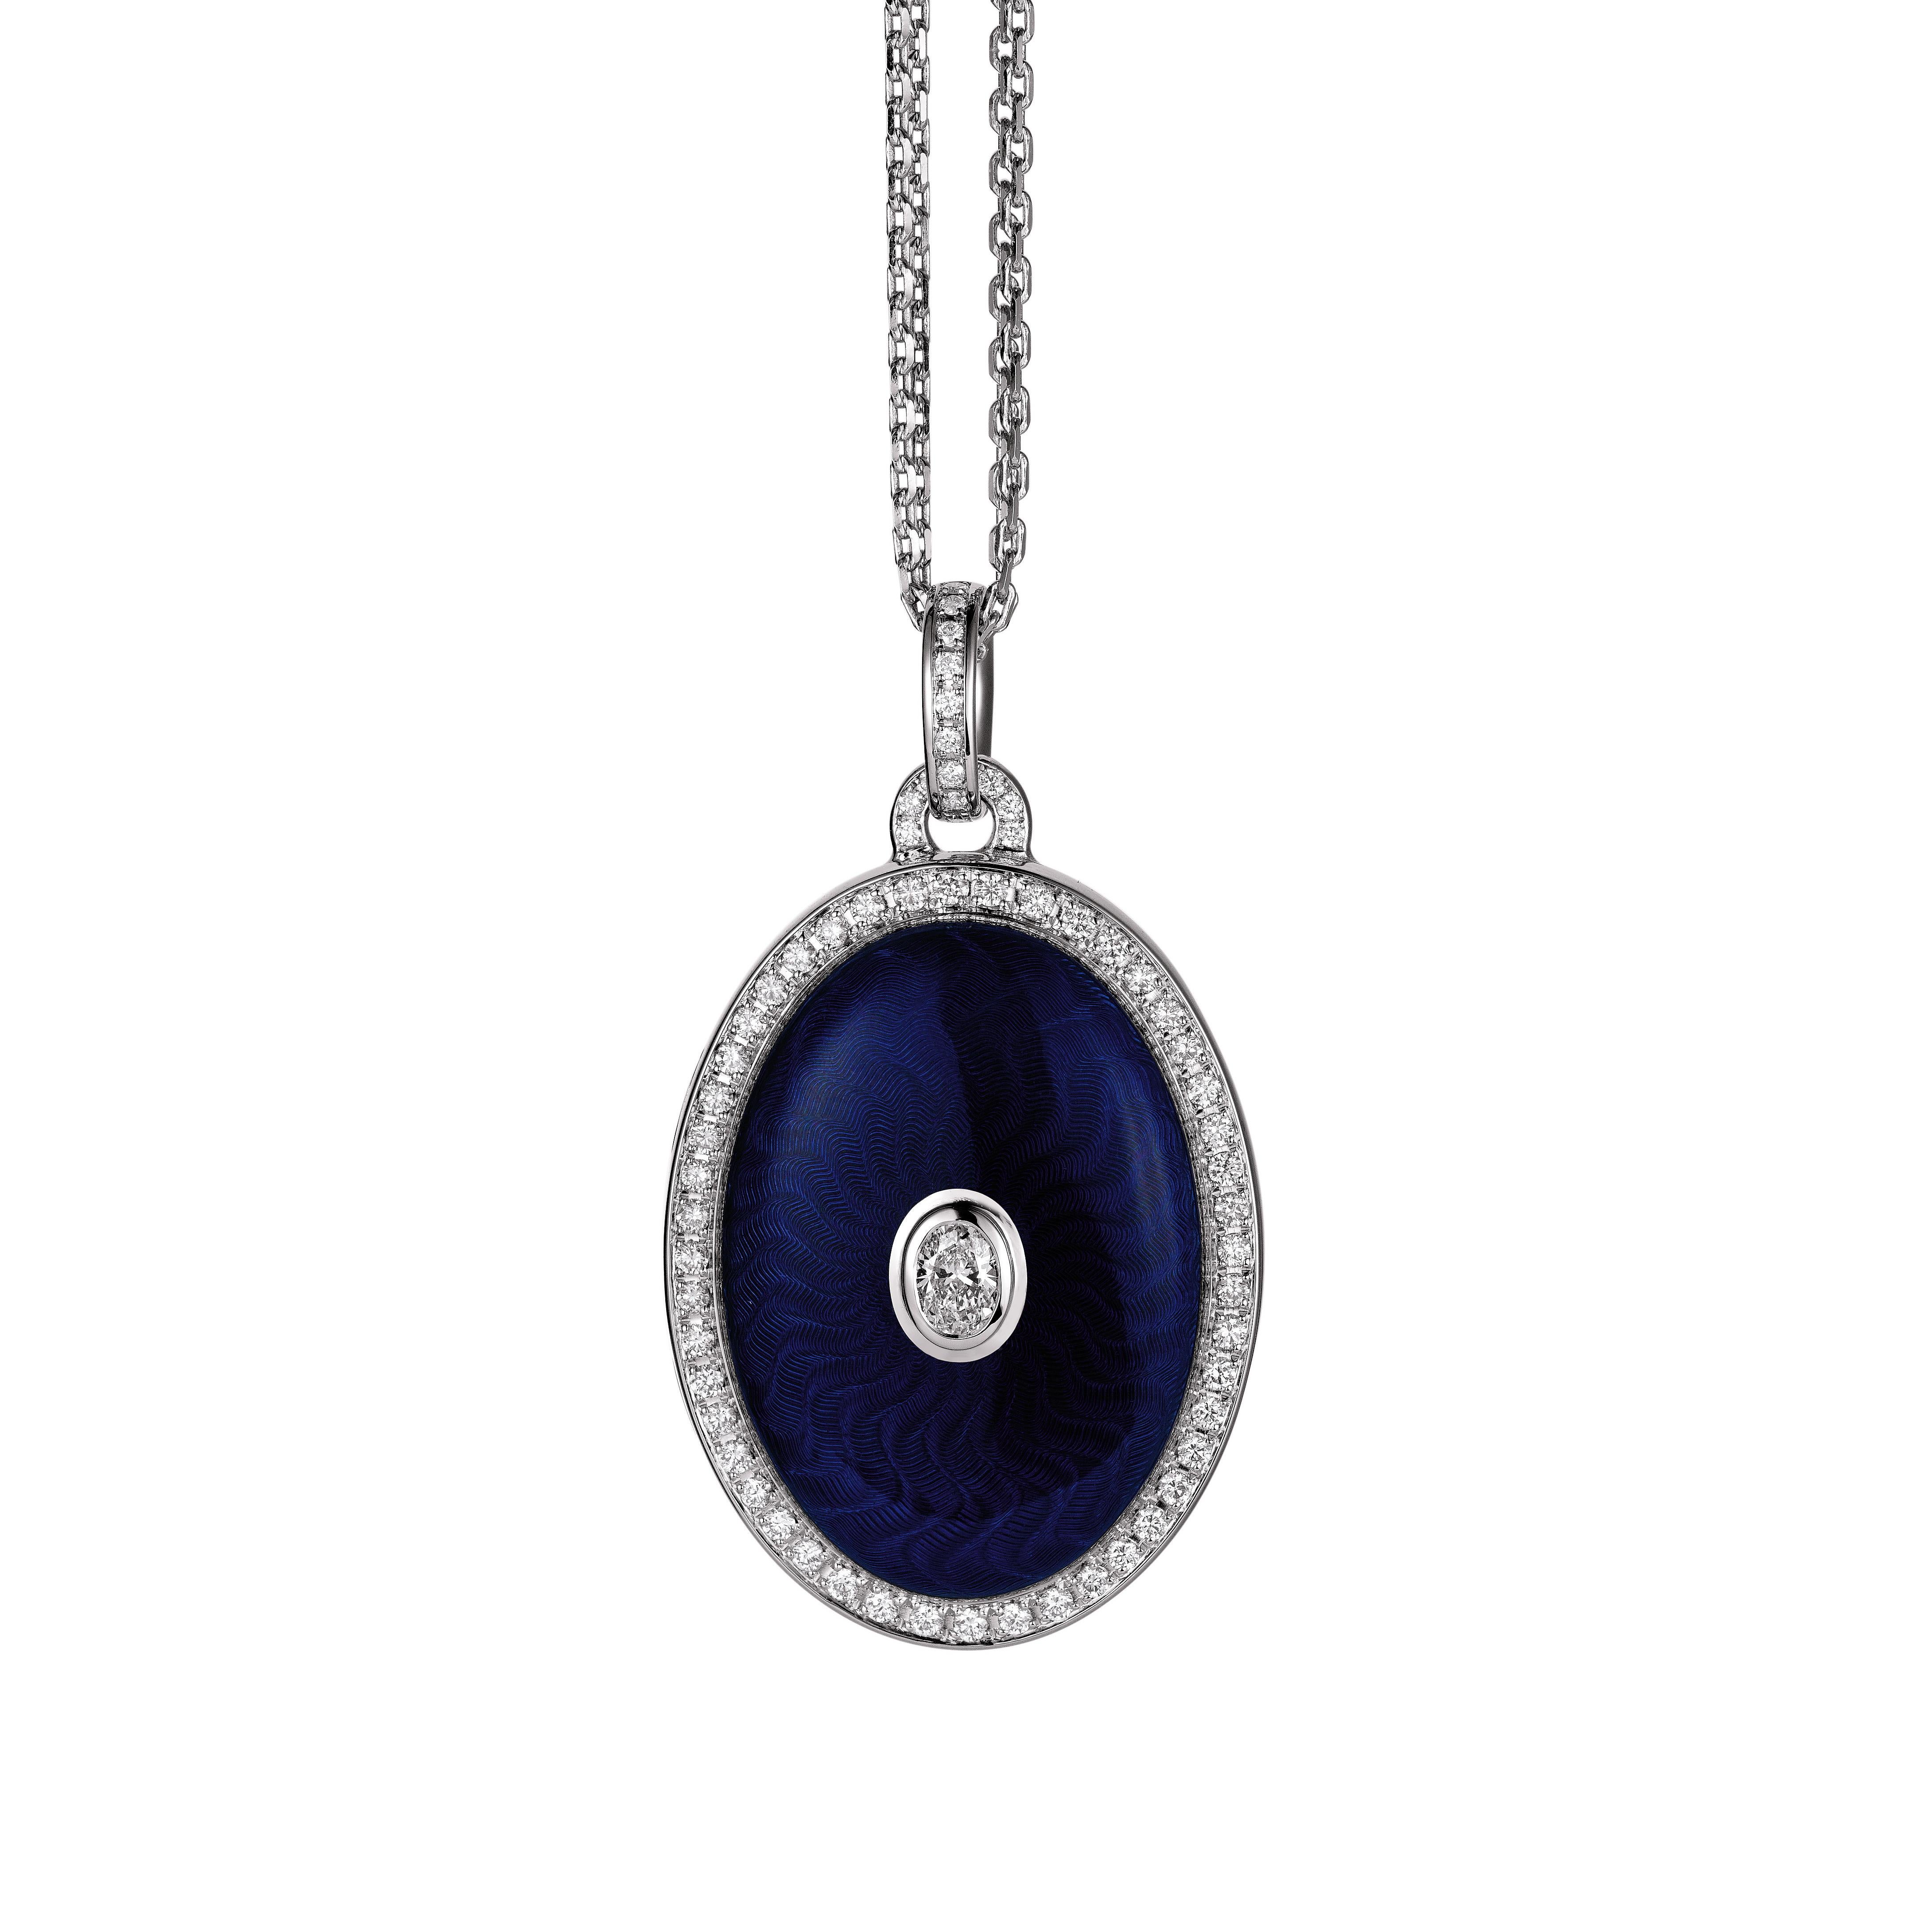 Brilliant Cut Oval Locket Pendant Necklace White Gold Blue Guilloche Enamel 65 Diamonds For Sale